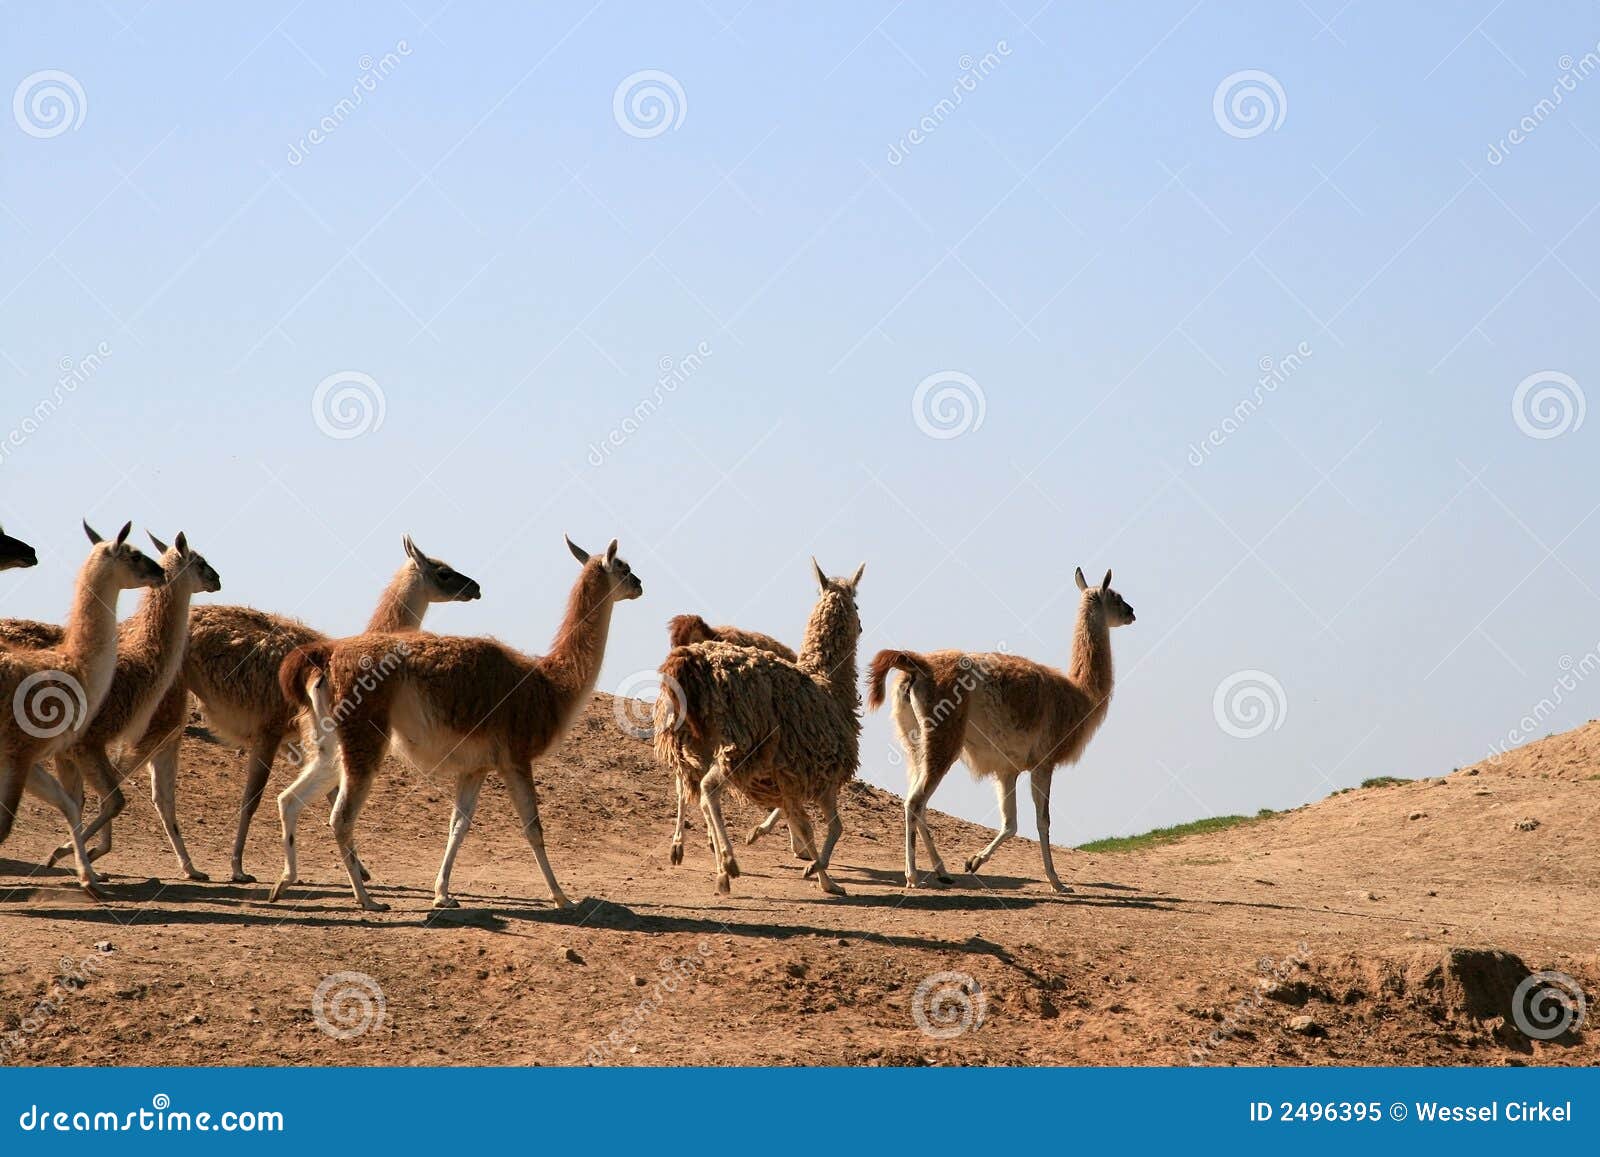 a herd of llamas (guanaco)